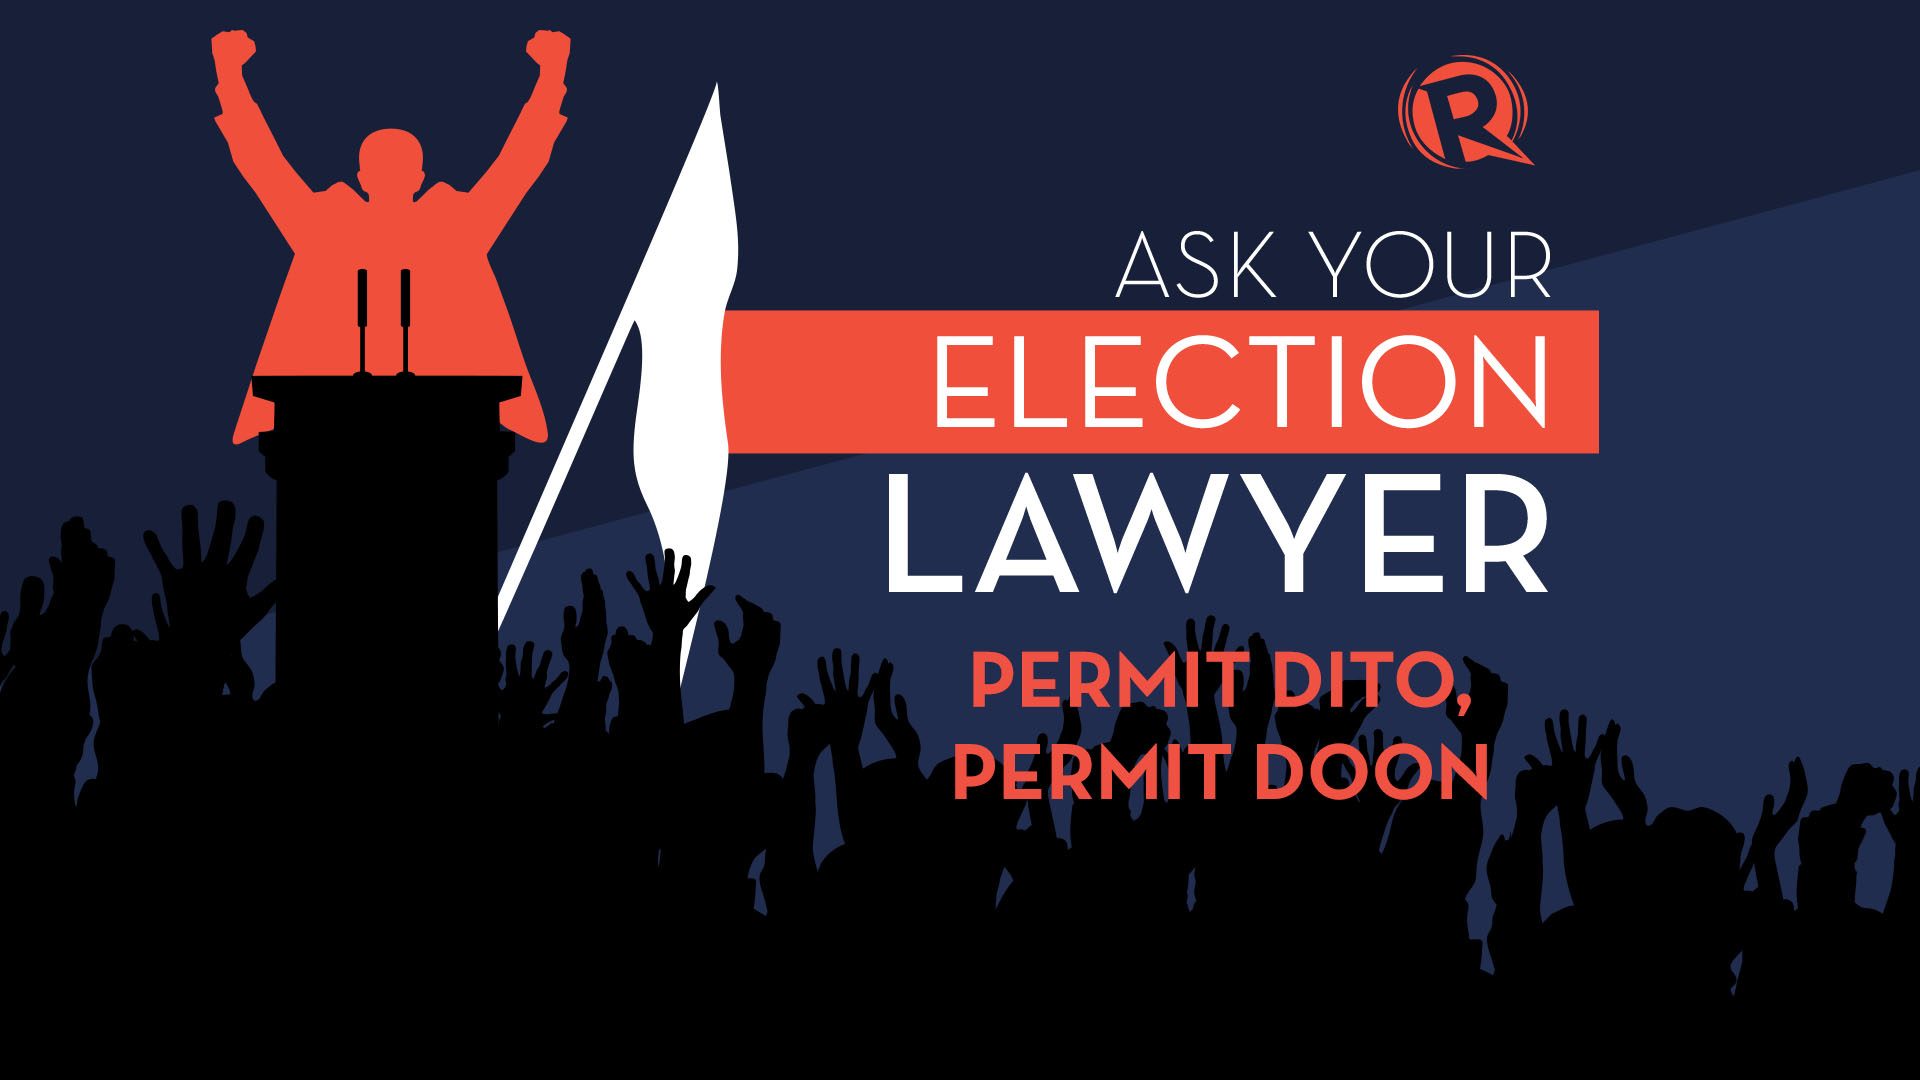 Tanyakan kepada pengacara pemilu Anda: Izinkan, izinkan